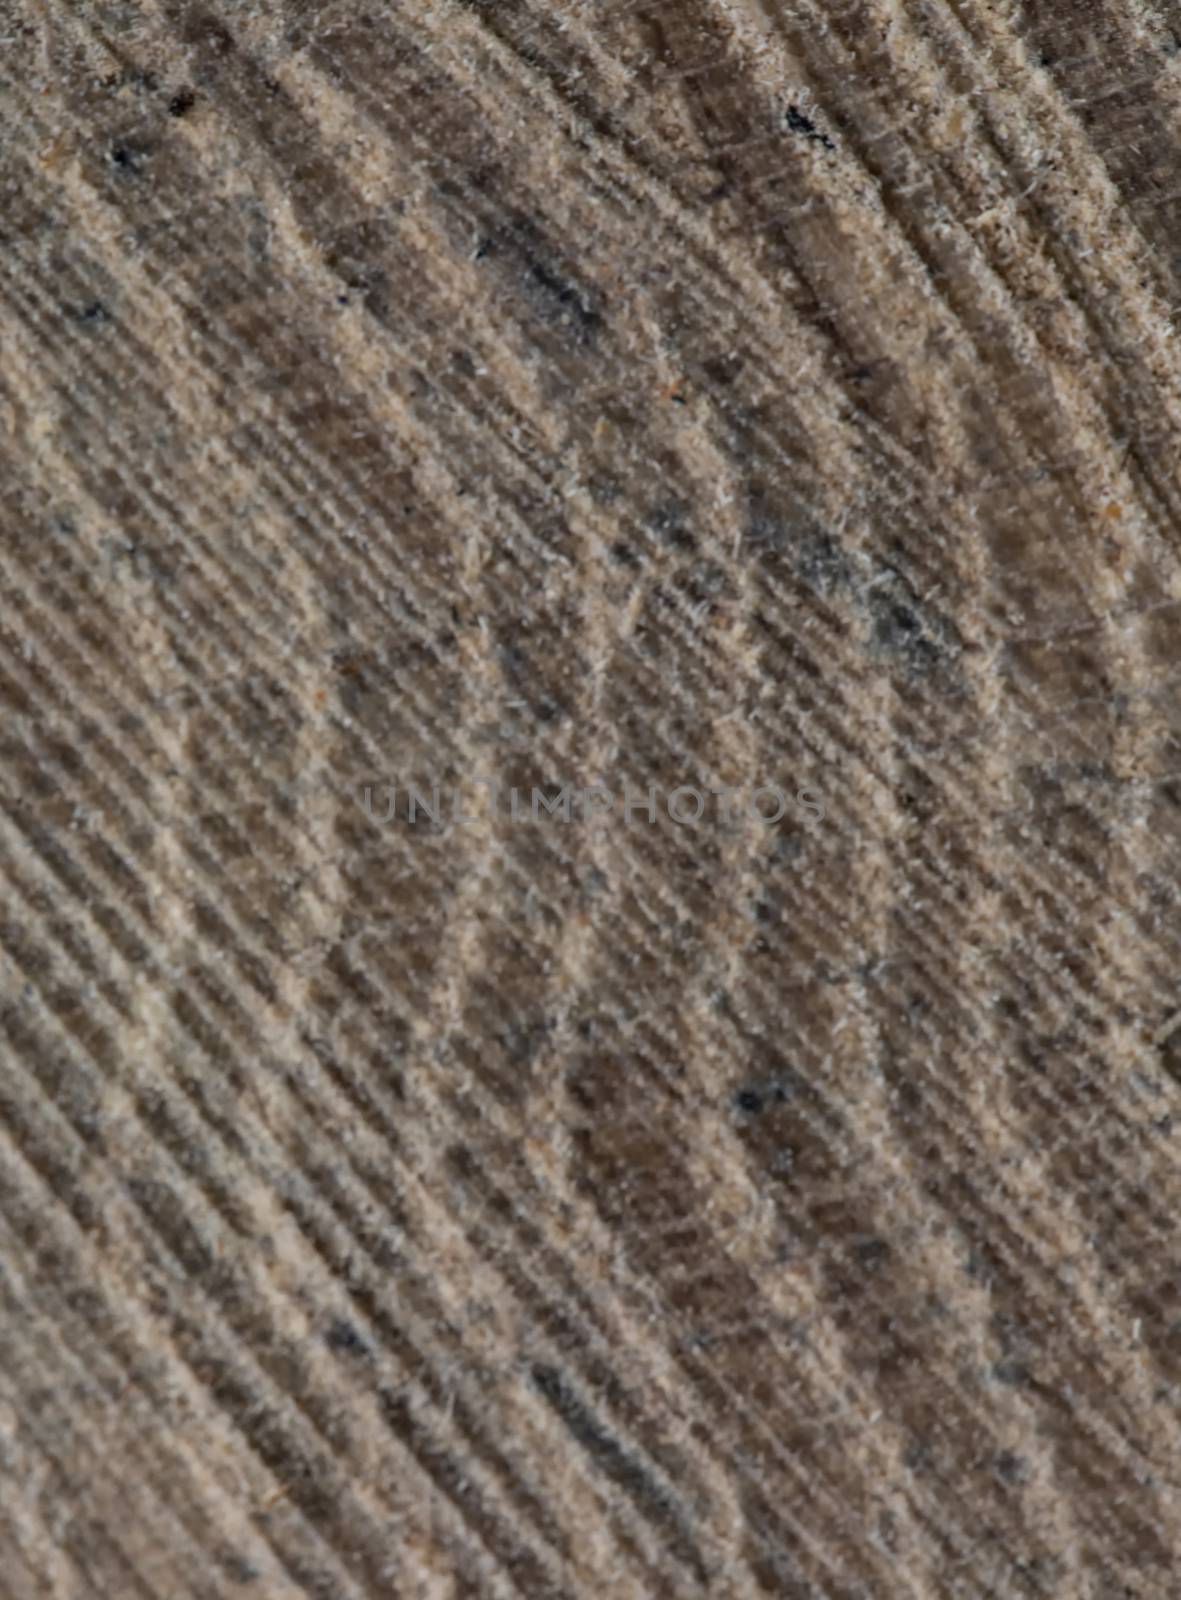 Close-up of Sawn Oak Log by CharlieFloyd